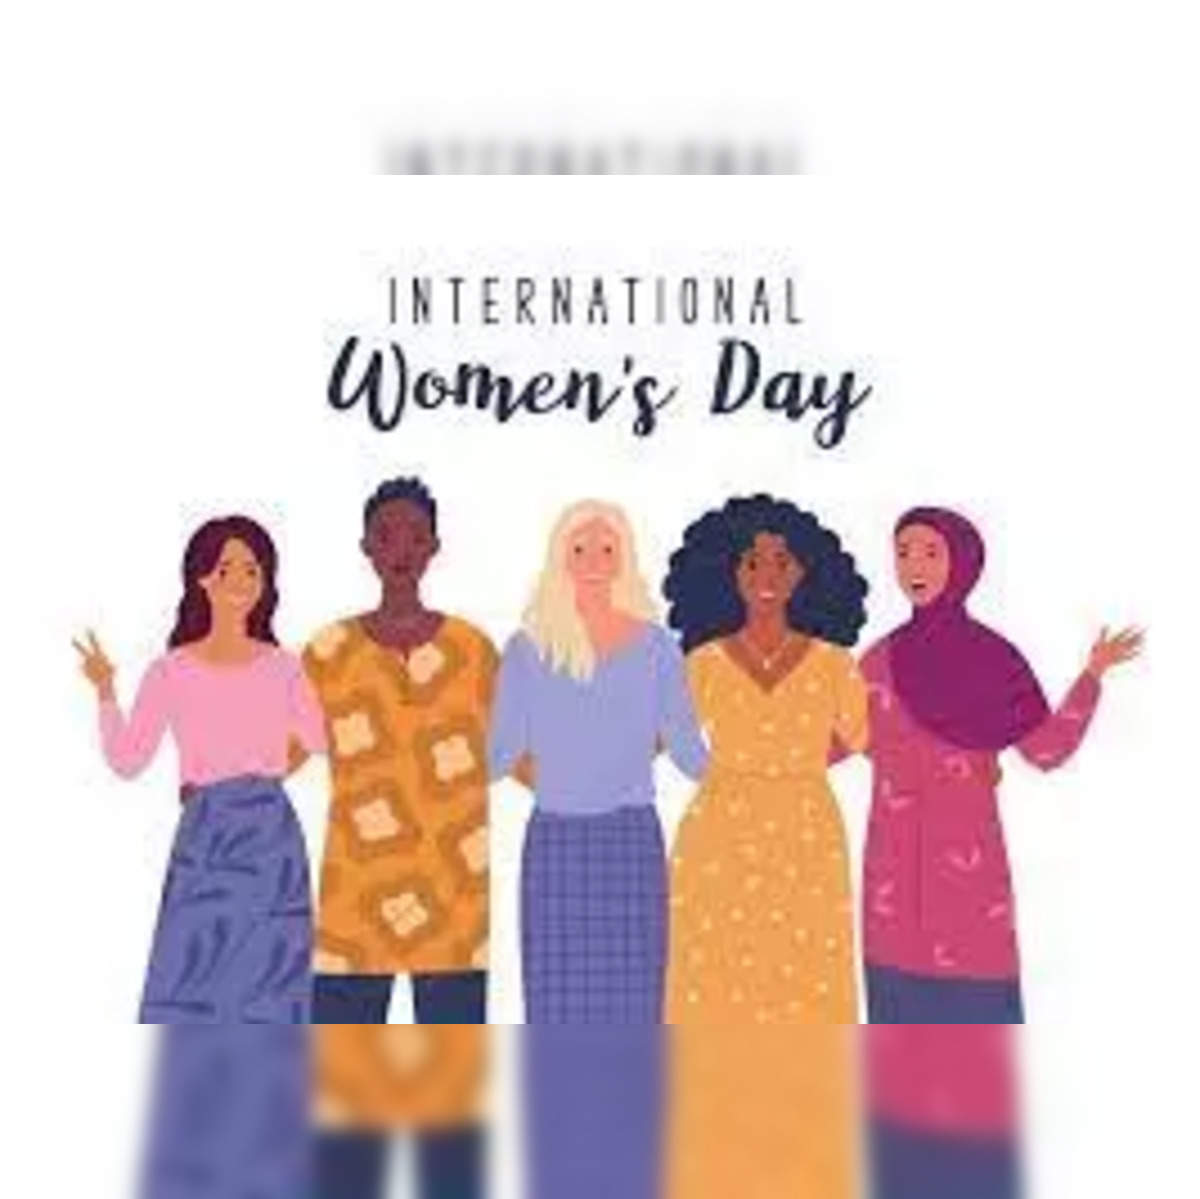 Do we still need International Woman's Day?